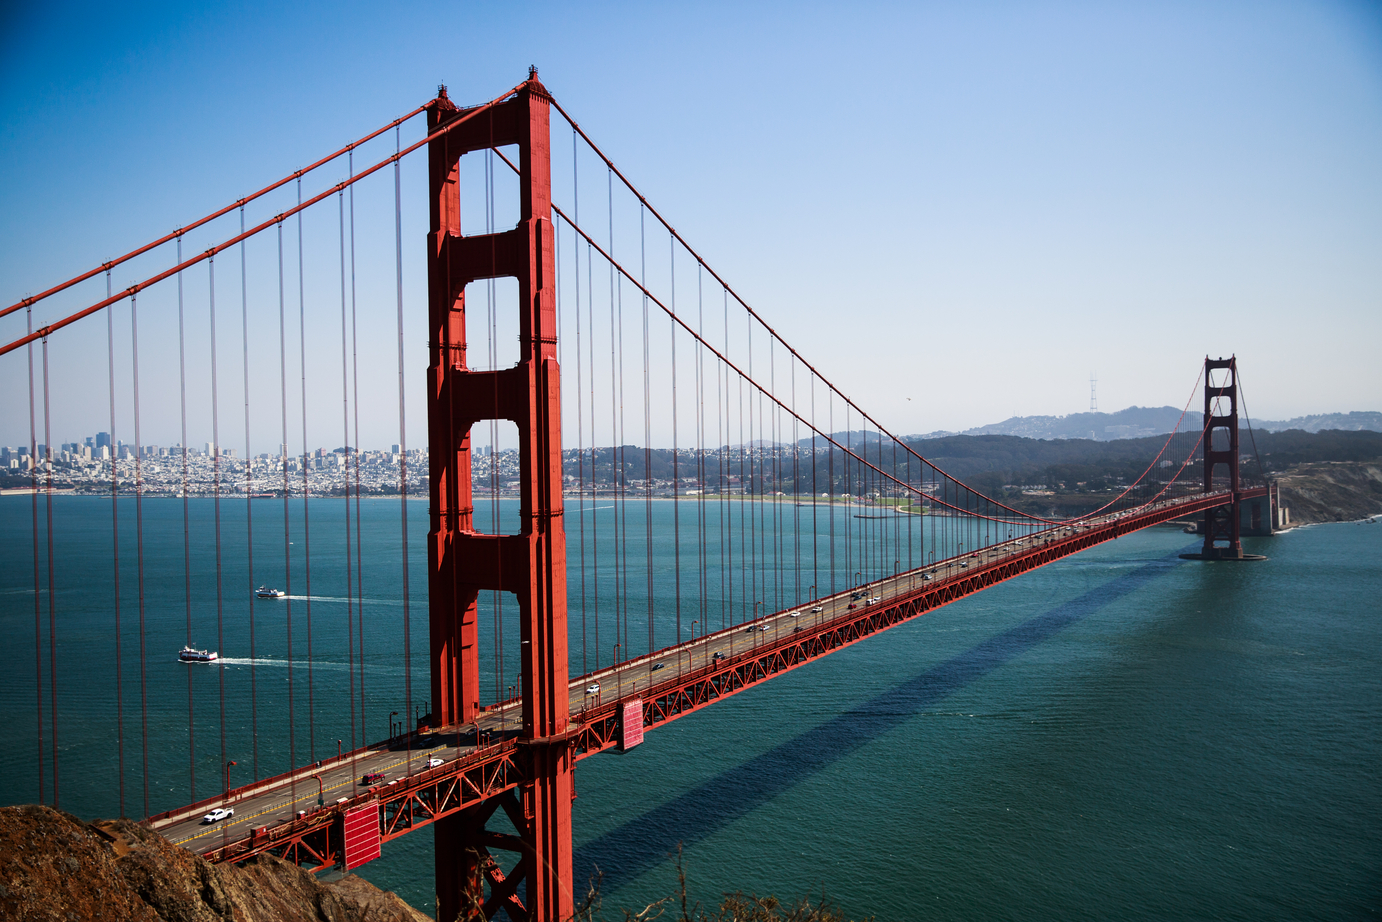 The Golden Gate Bridge in San Francisco, California, September 6, 2016